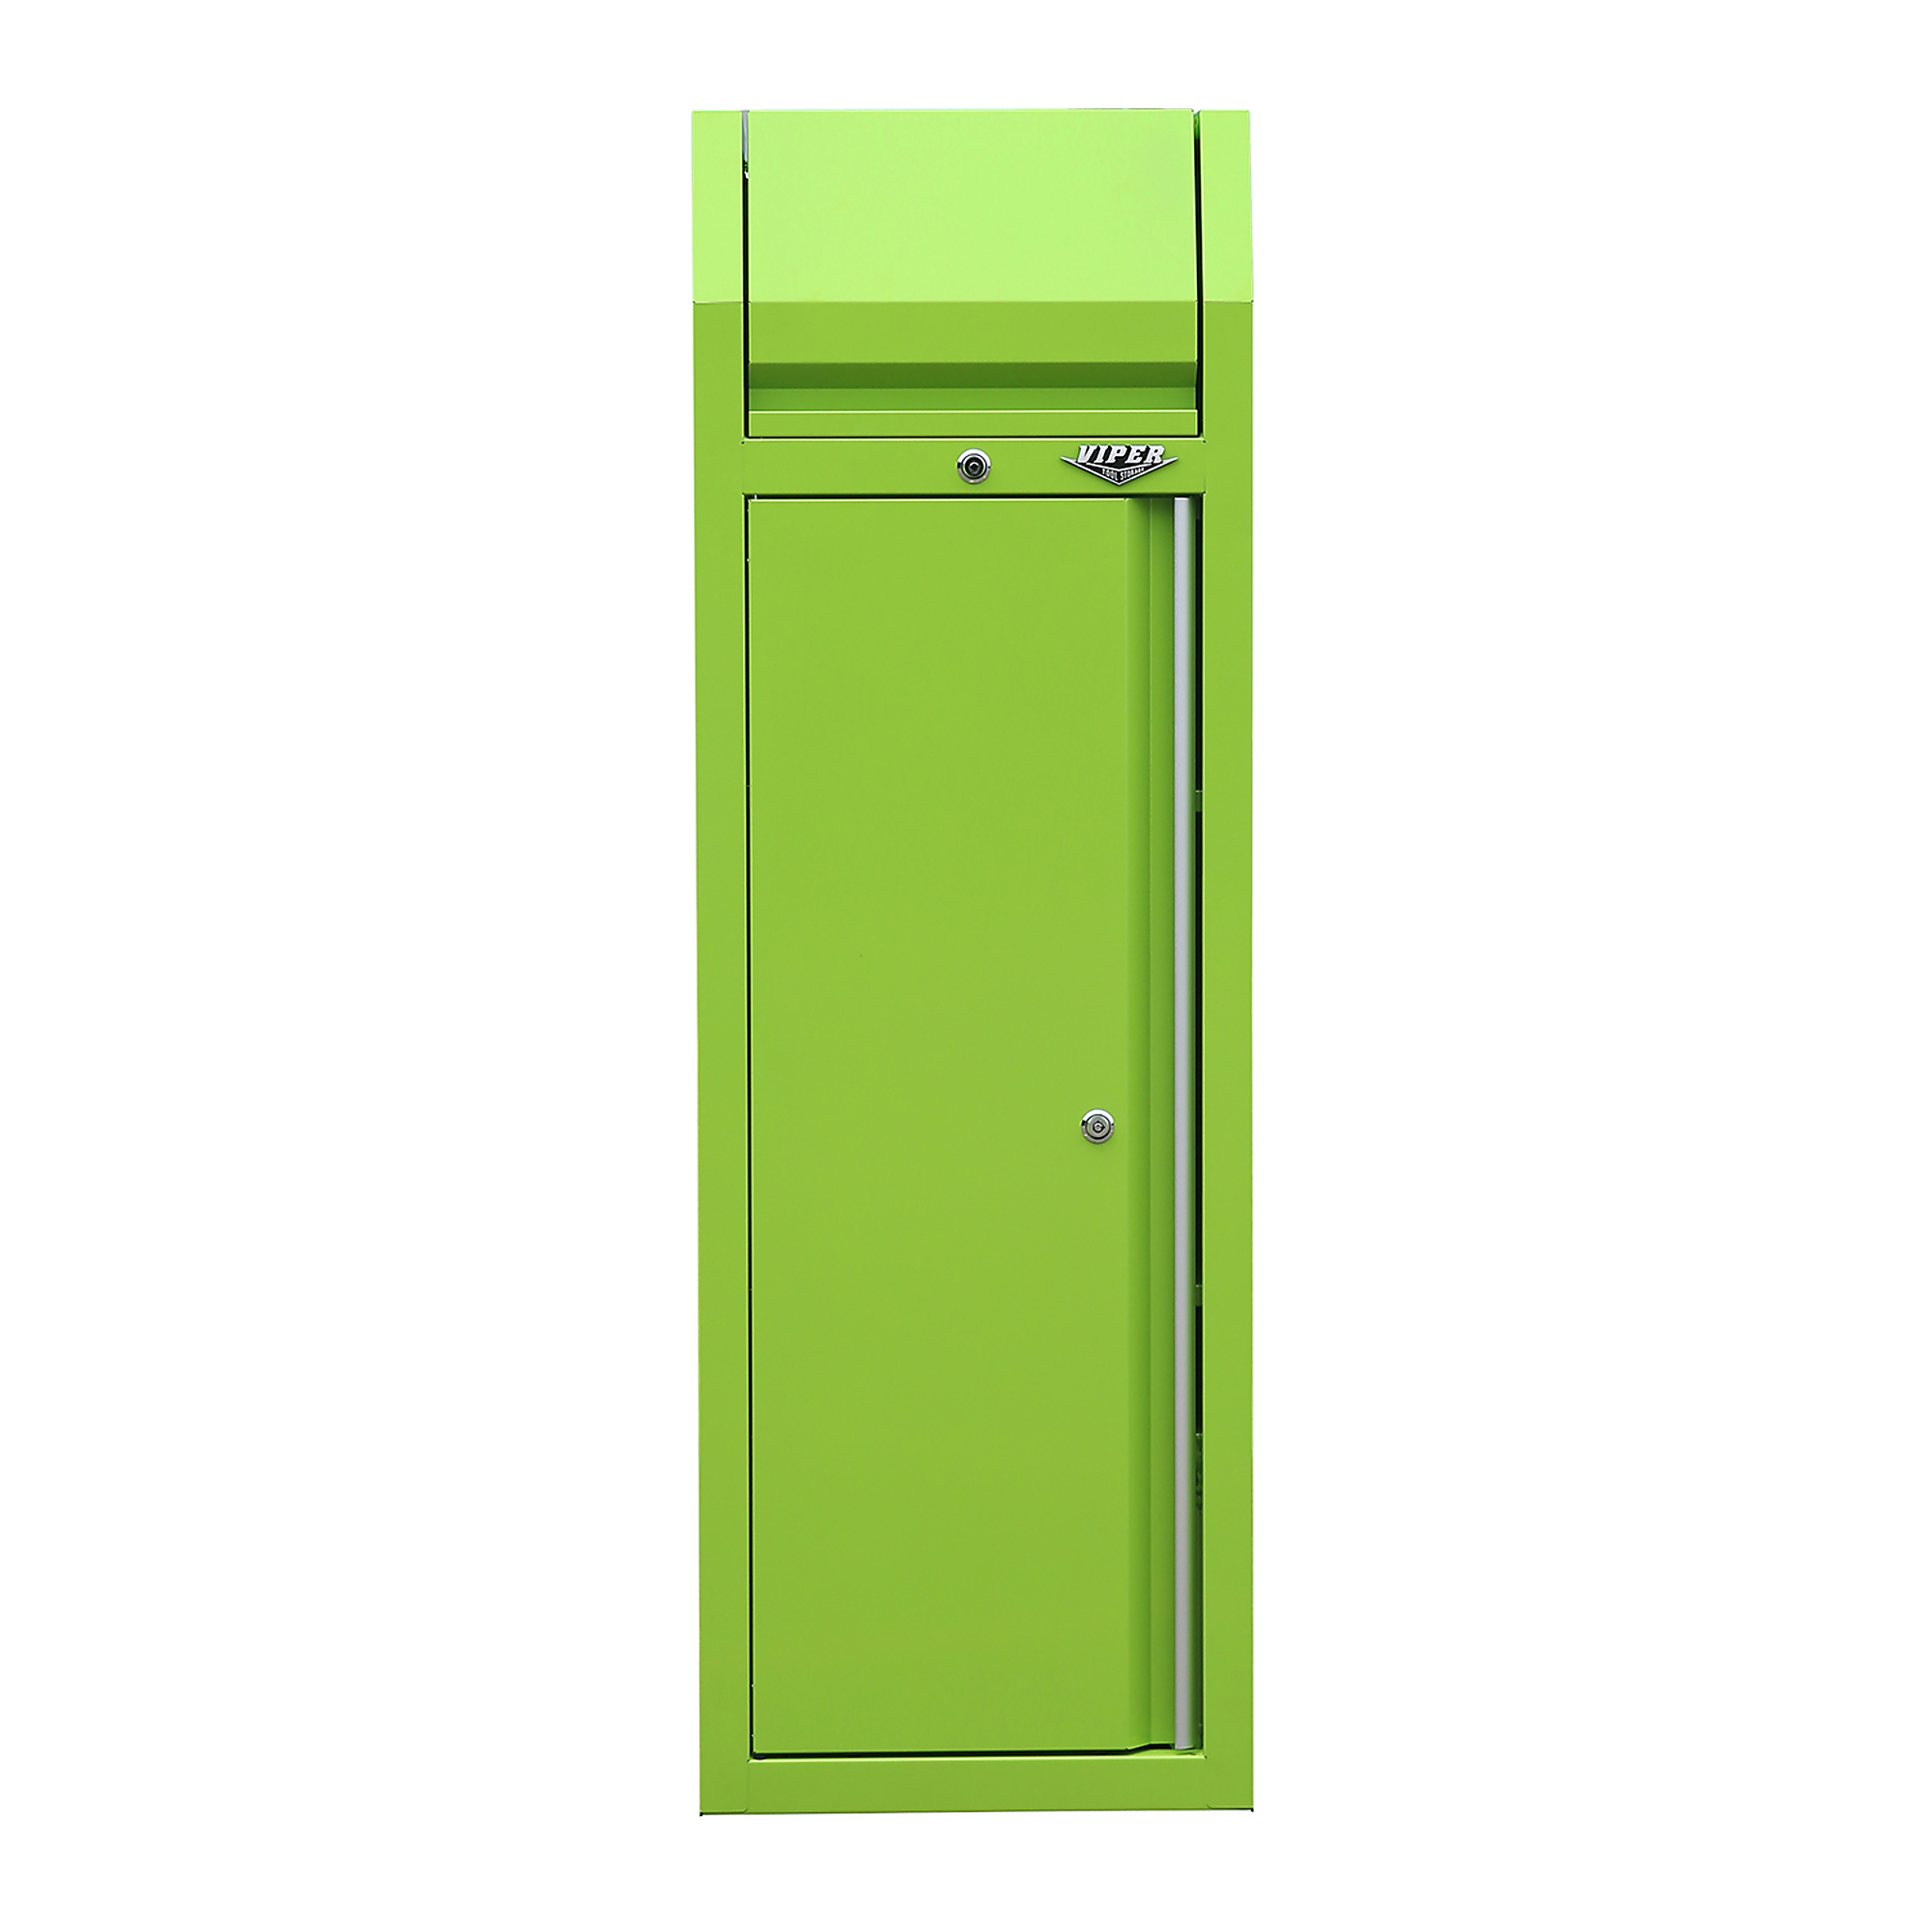 Viper Tool Storage, 3-Shelf Steel Side Locker, Lime Green, Width 19.63 in, Height 67 in, Color Lime, Model V2003SLLG